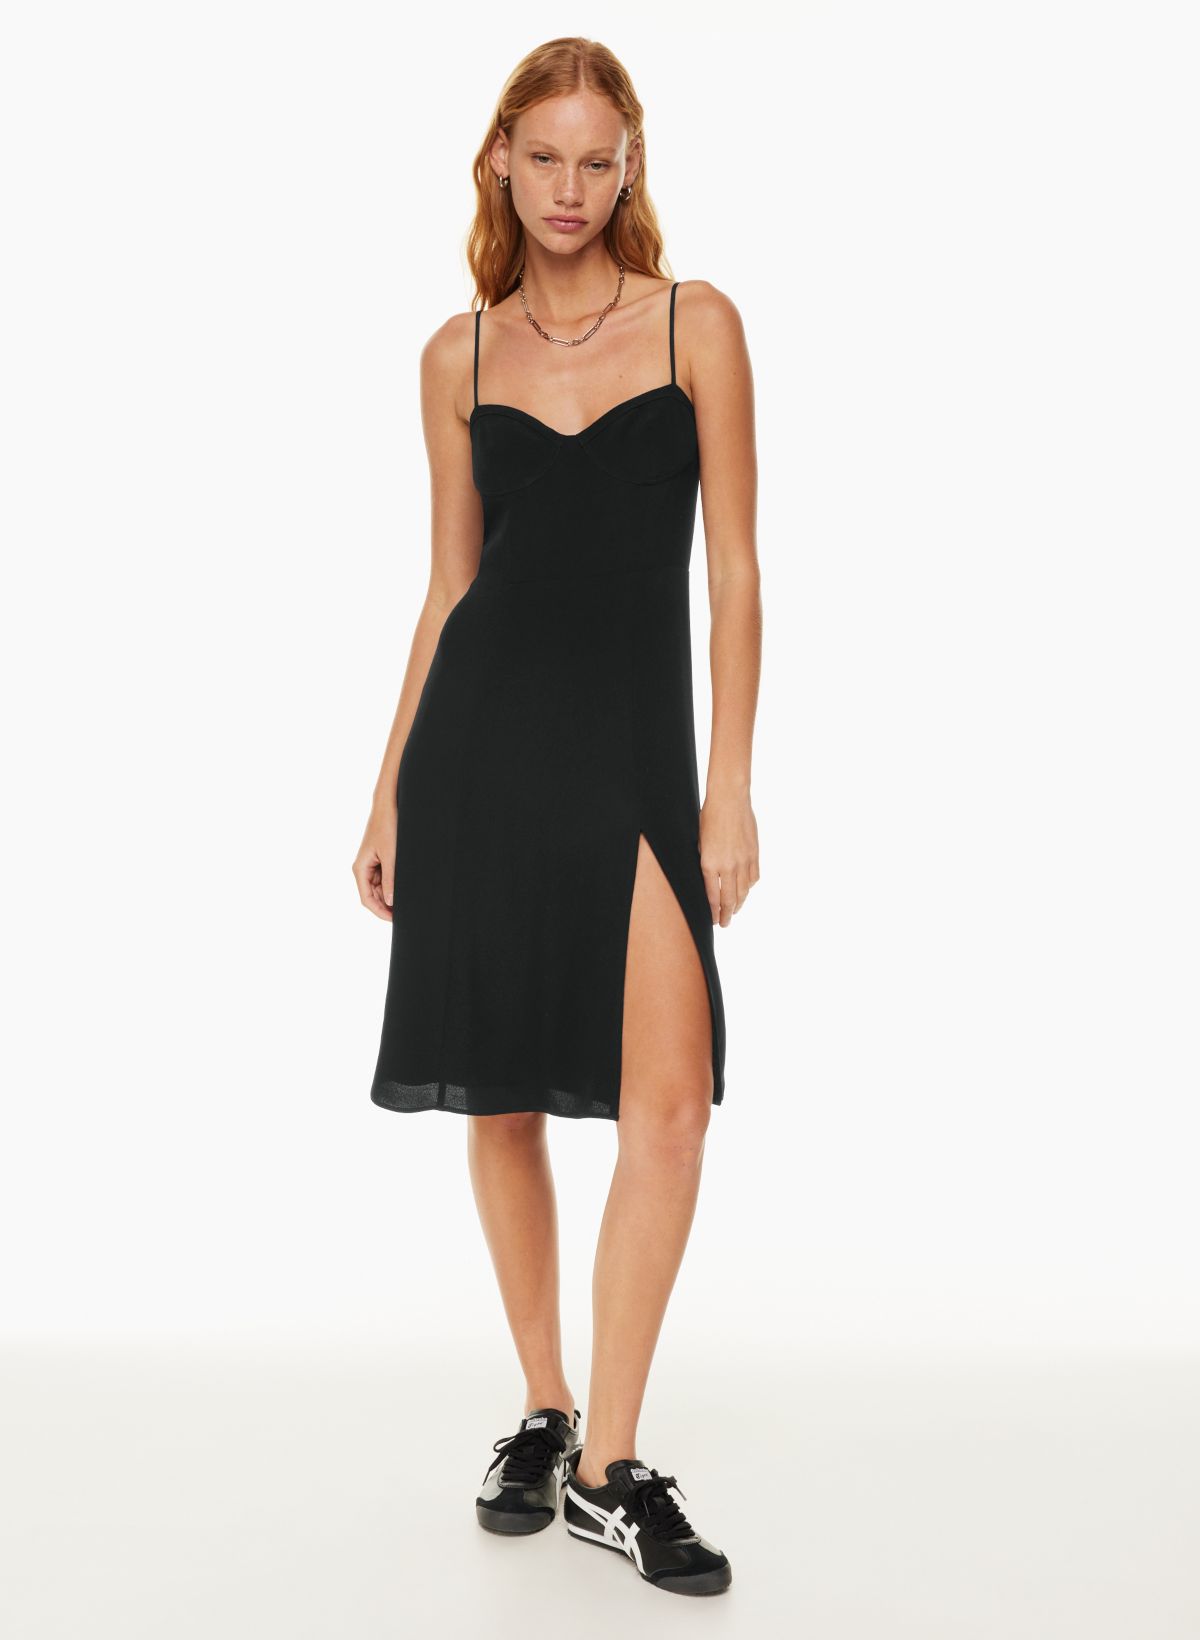 Soft and Smooth Seamless Midi Dress (Black)- FINAL SALE